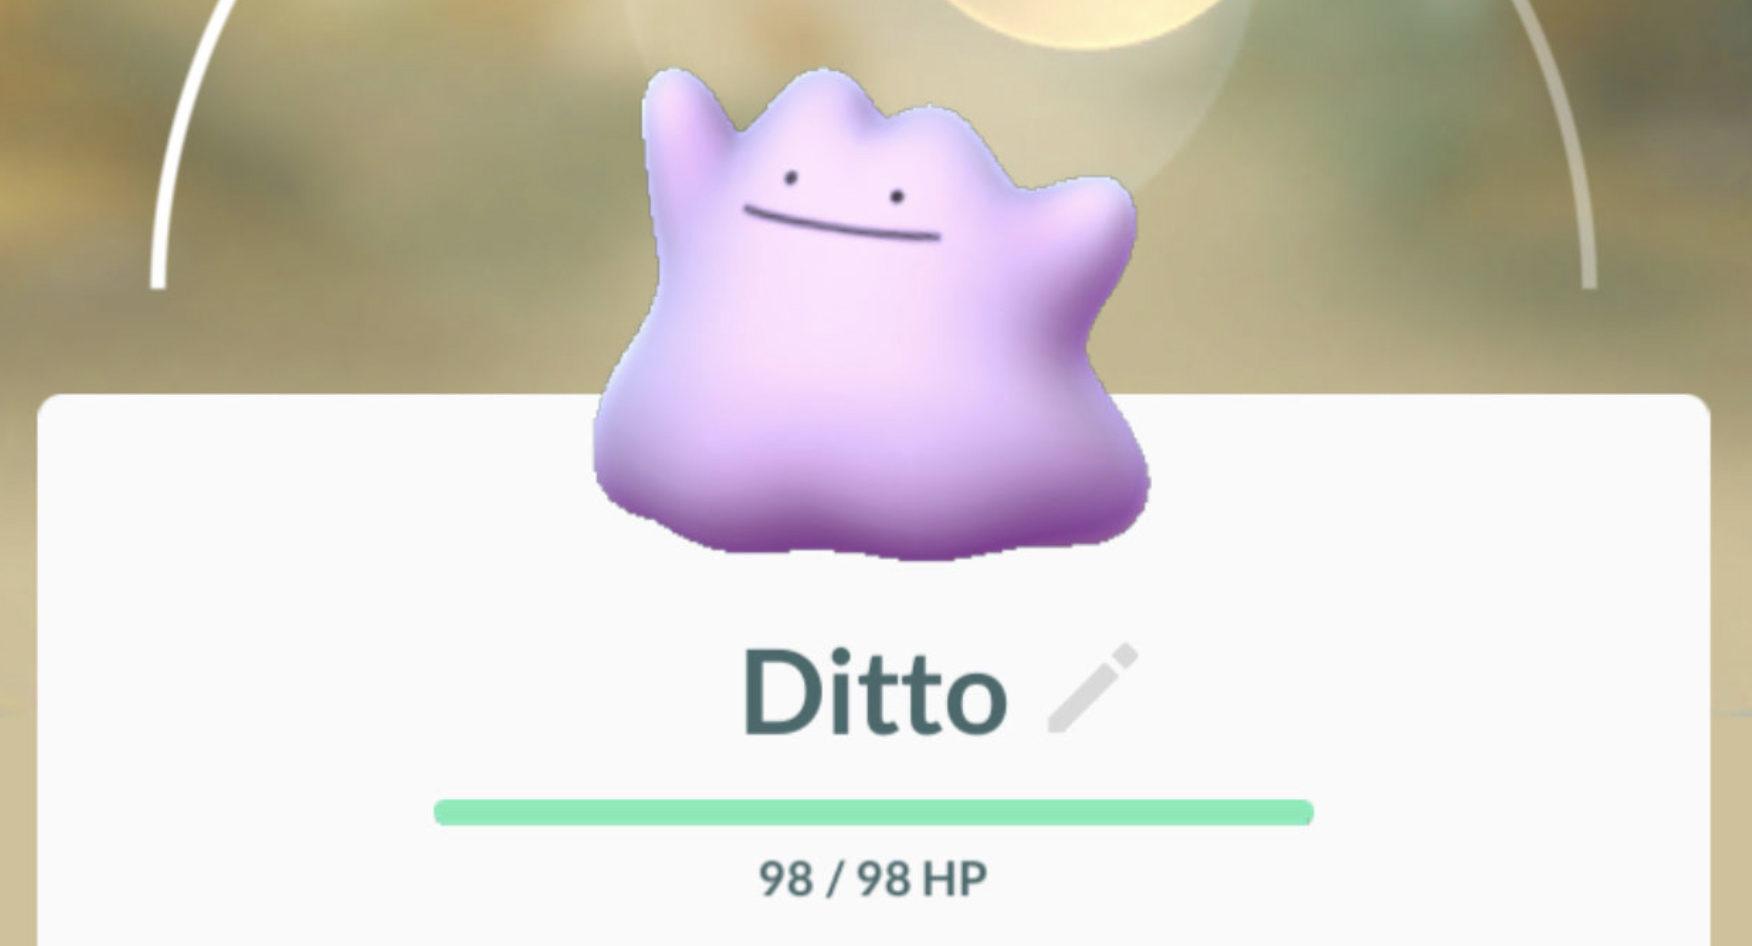 Screenshot of Ditto in Pokemon Go dex.